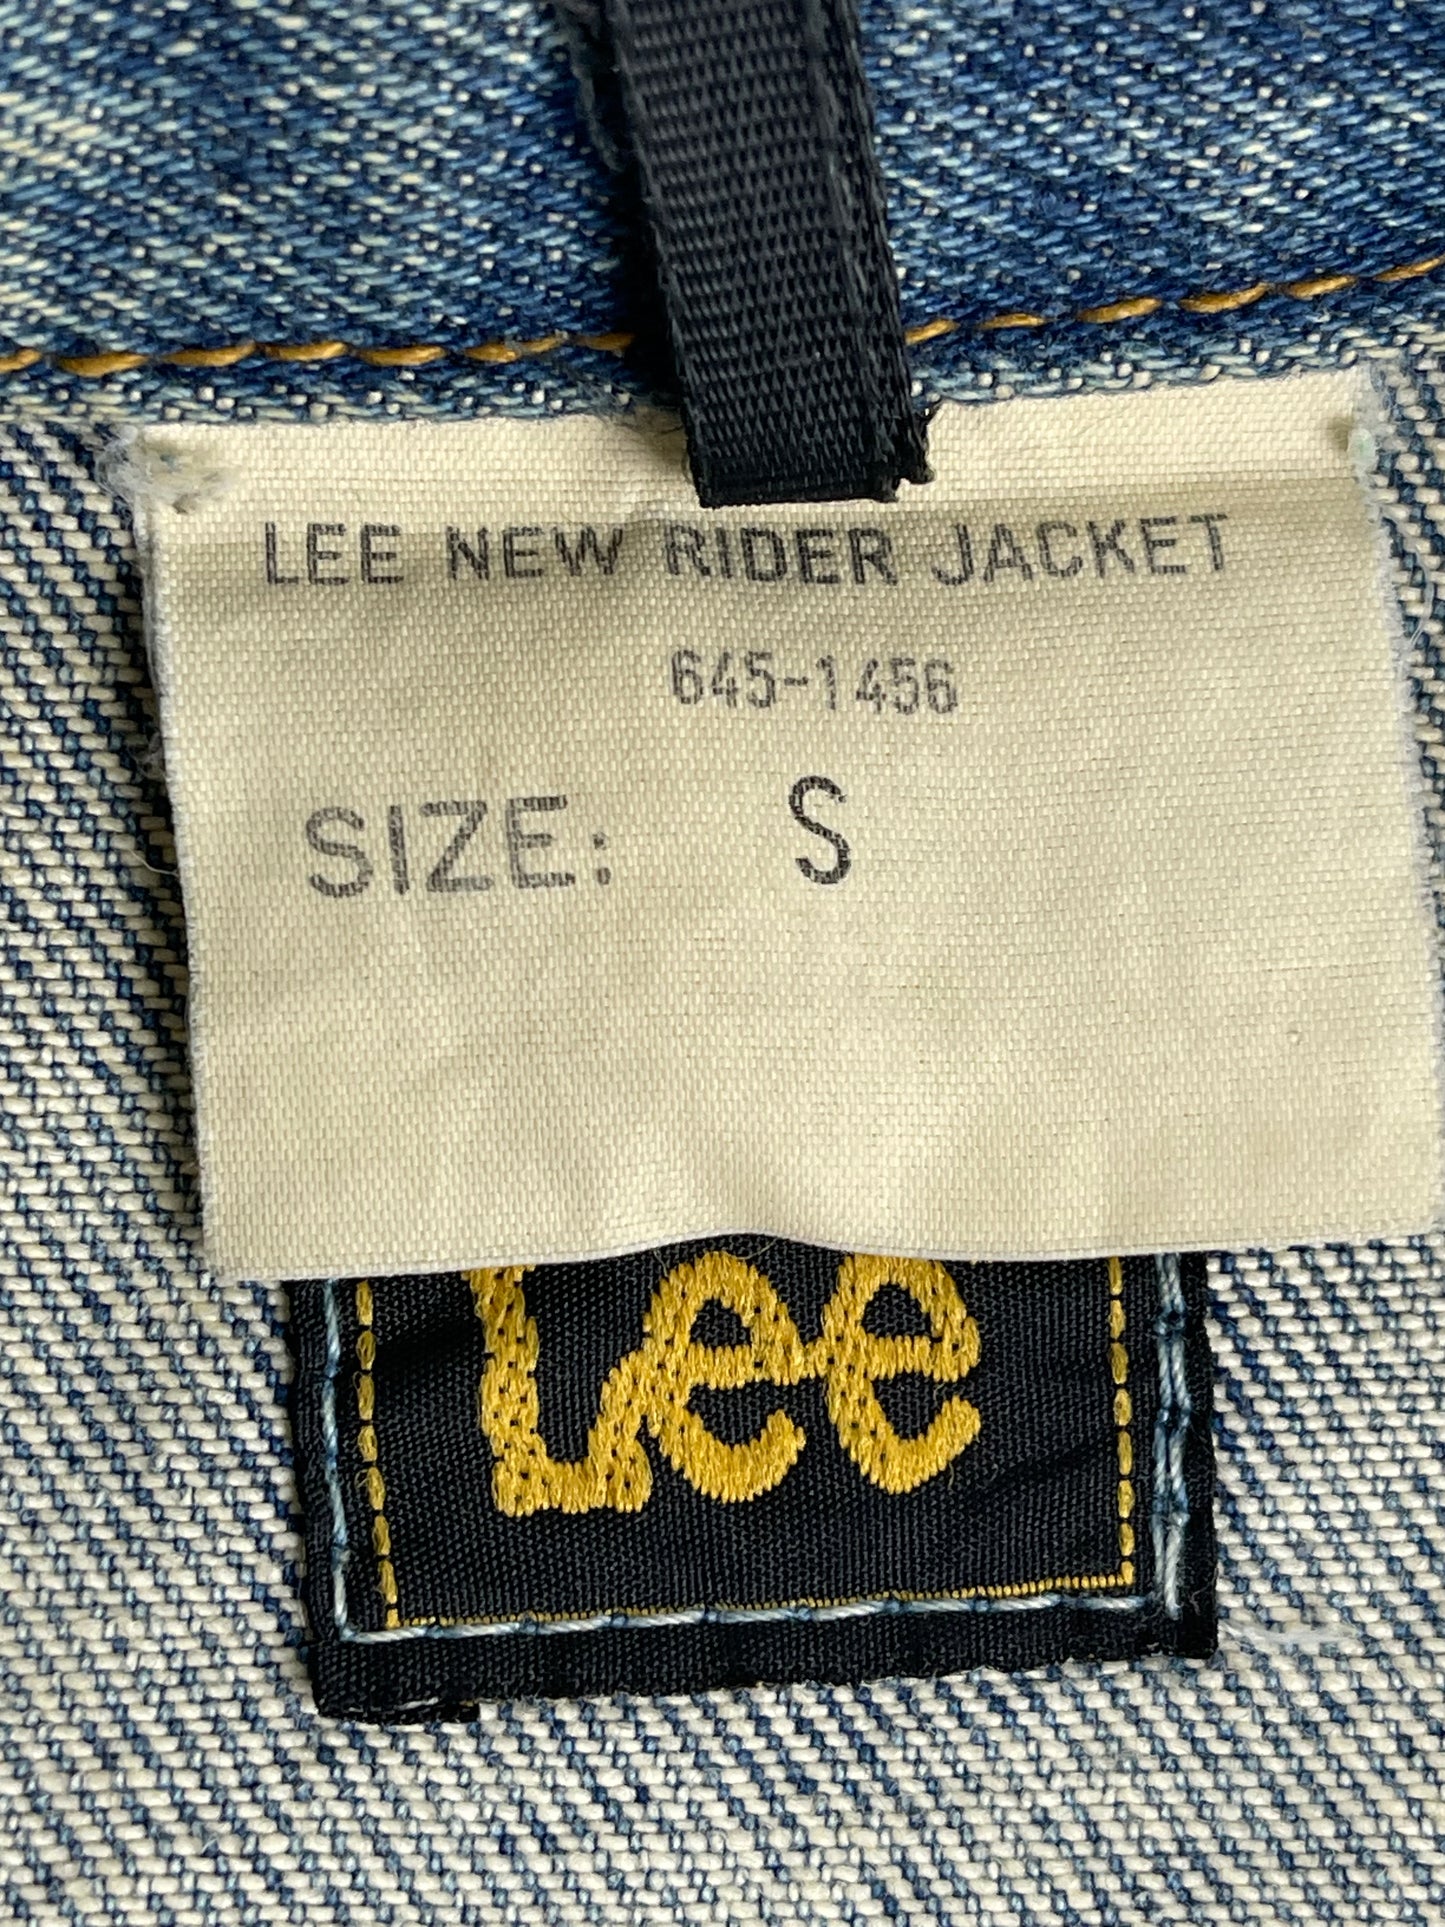 Lee New Rider Jacket